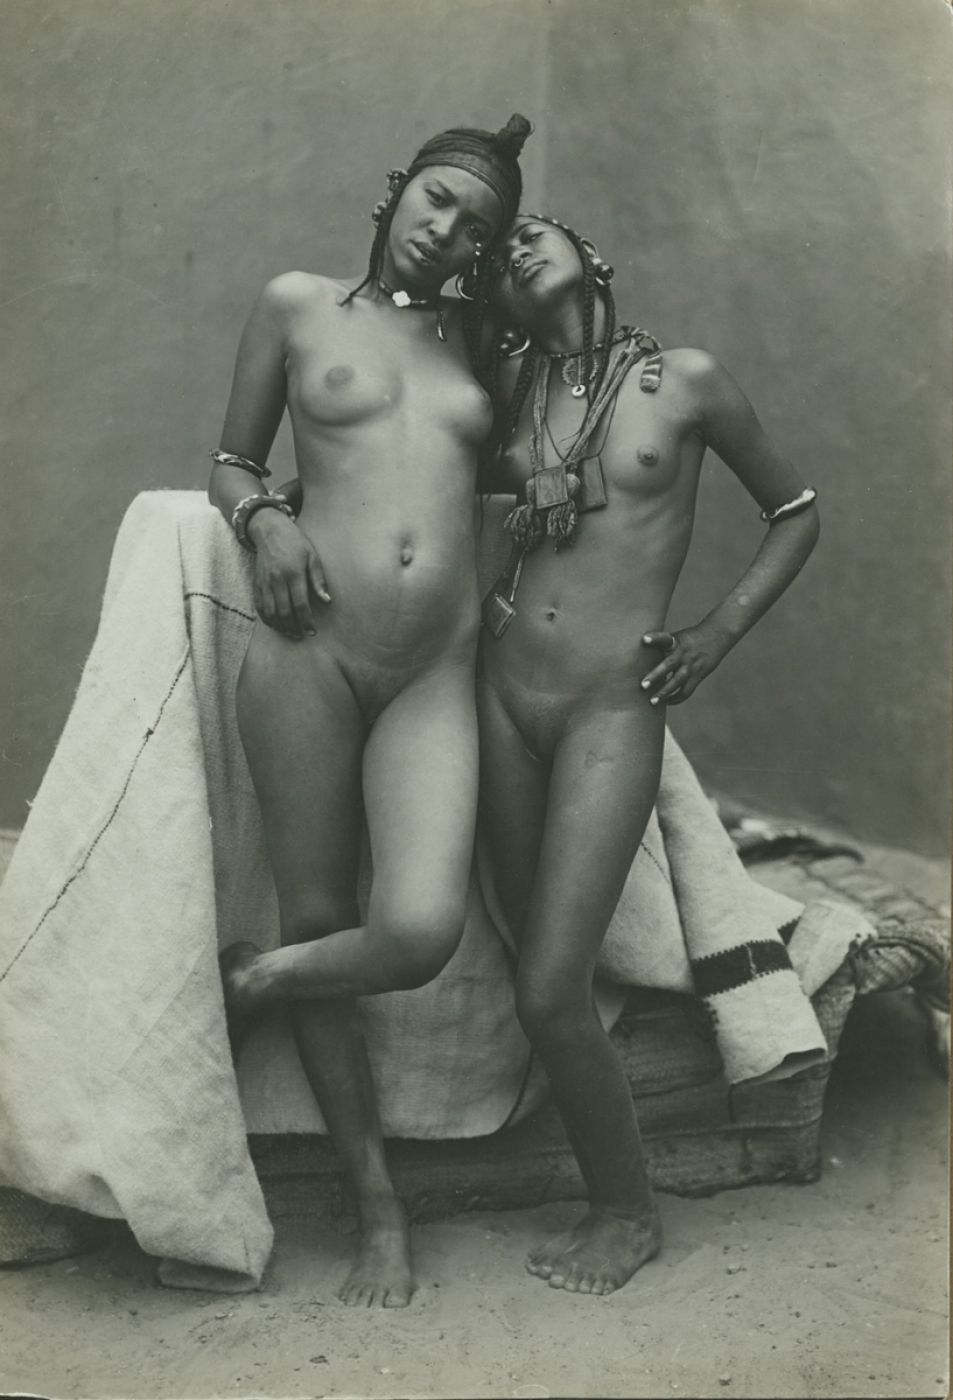 Edmond Fortier, “Nus orientalistes”, 1898